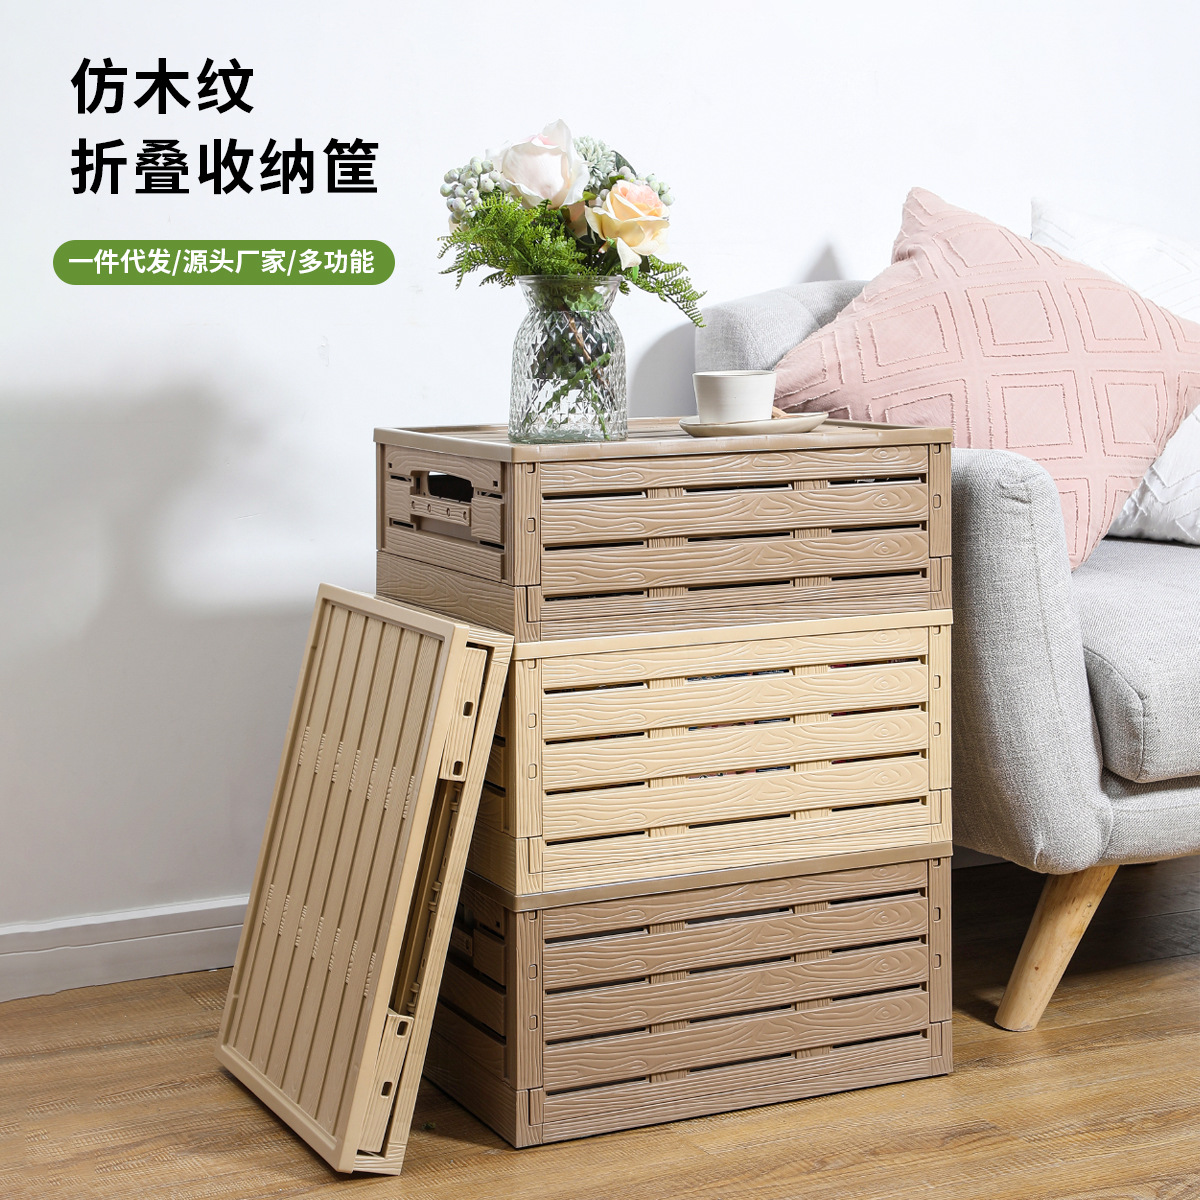 Folding Storage Basket Wood-like Large Storage Box Sundries Wardrobe Toy Storage Basket Snack Storage Box with Lid